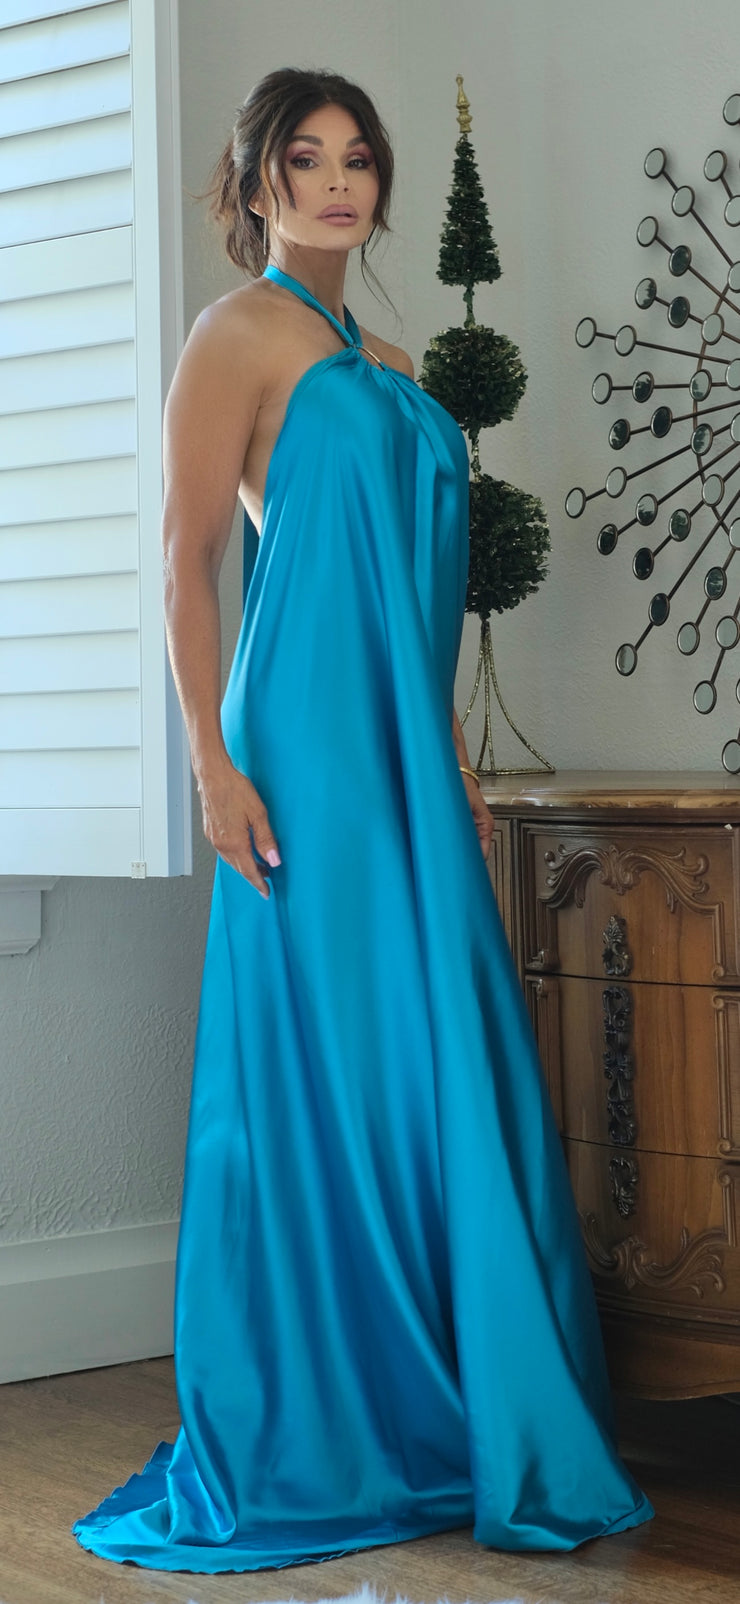 Making Waves Turquoise Satin Maxi Dress